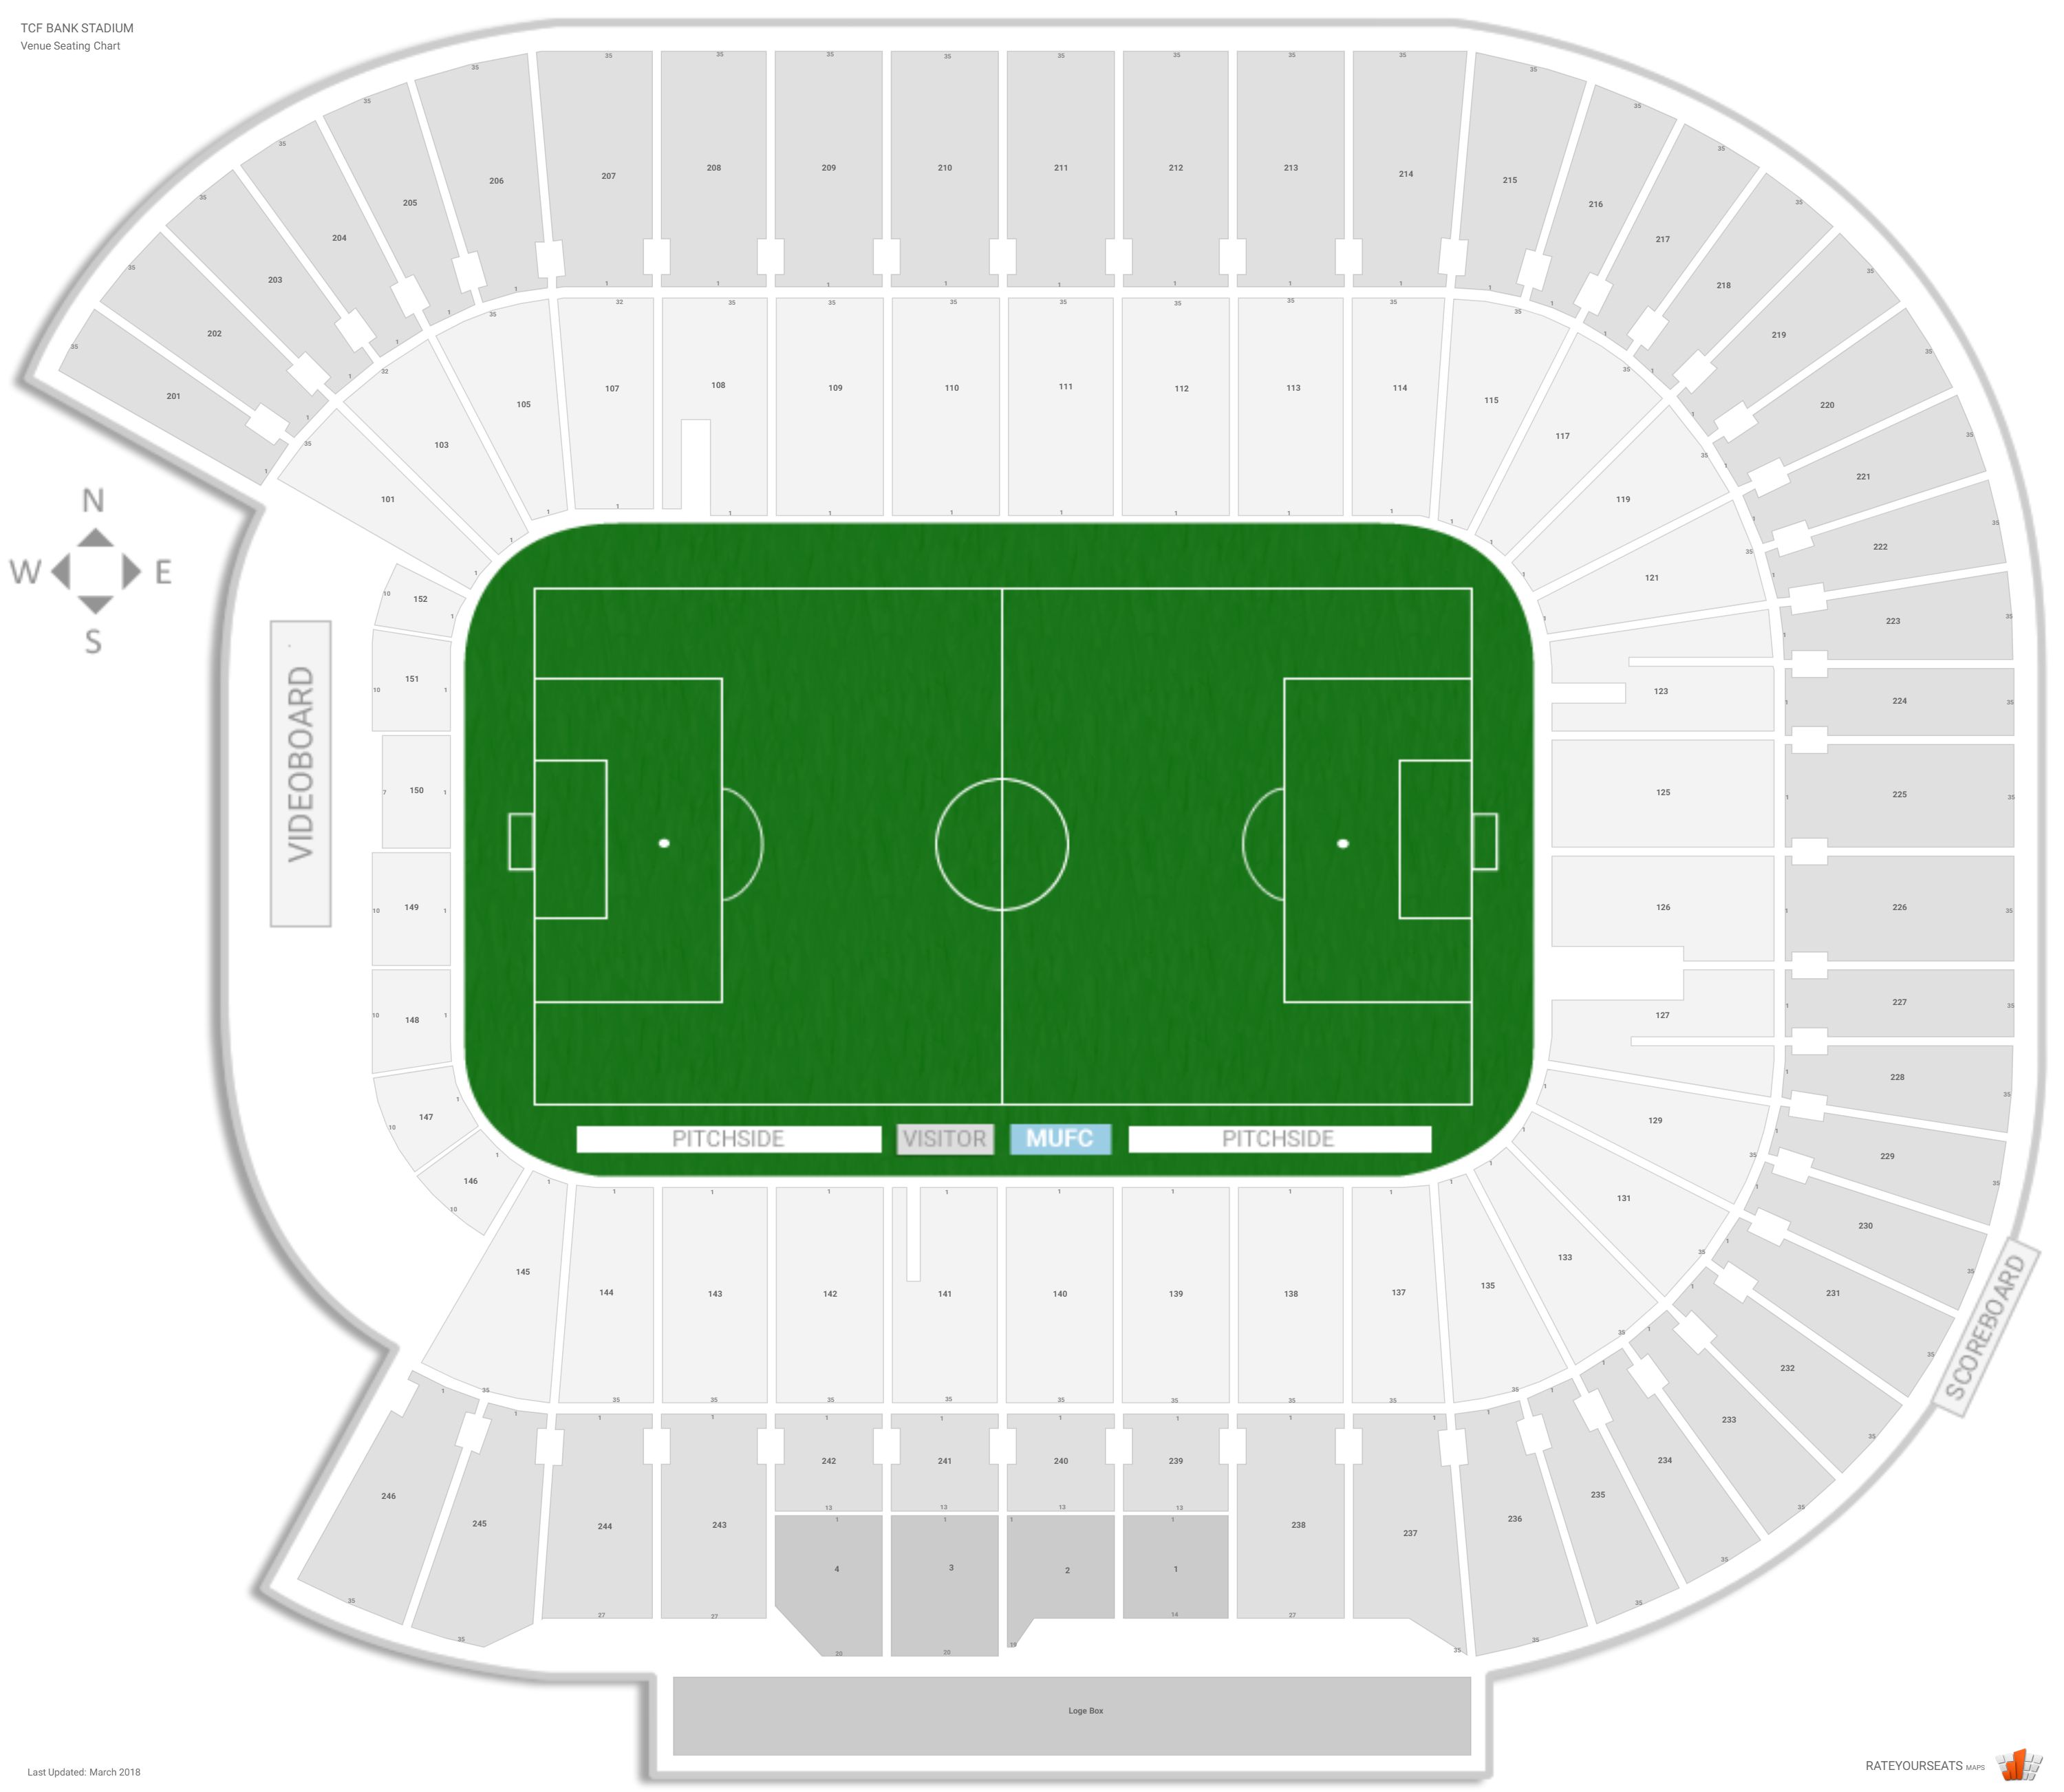 TCF Bank Stadium Seating Guide - RateYourSeats.com